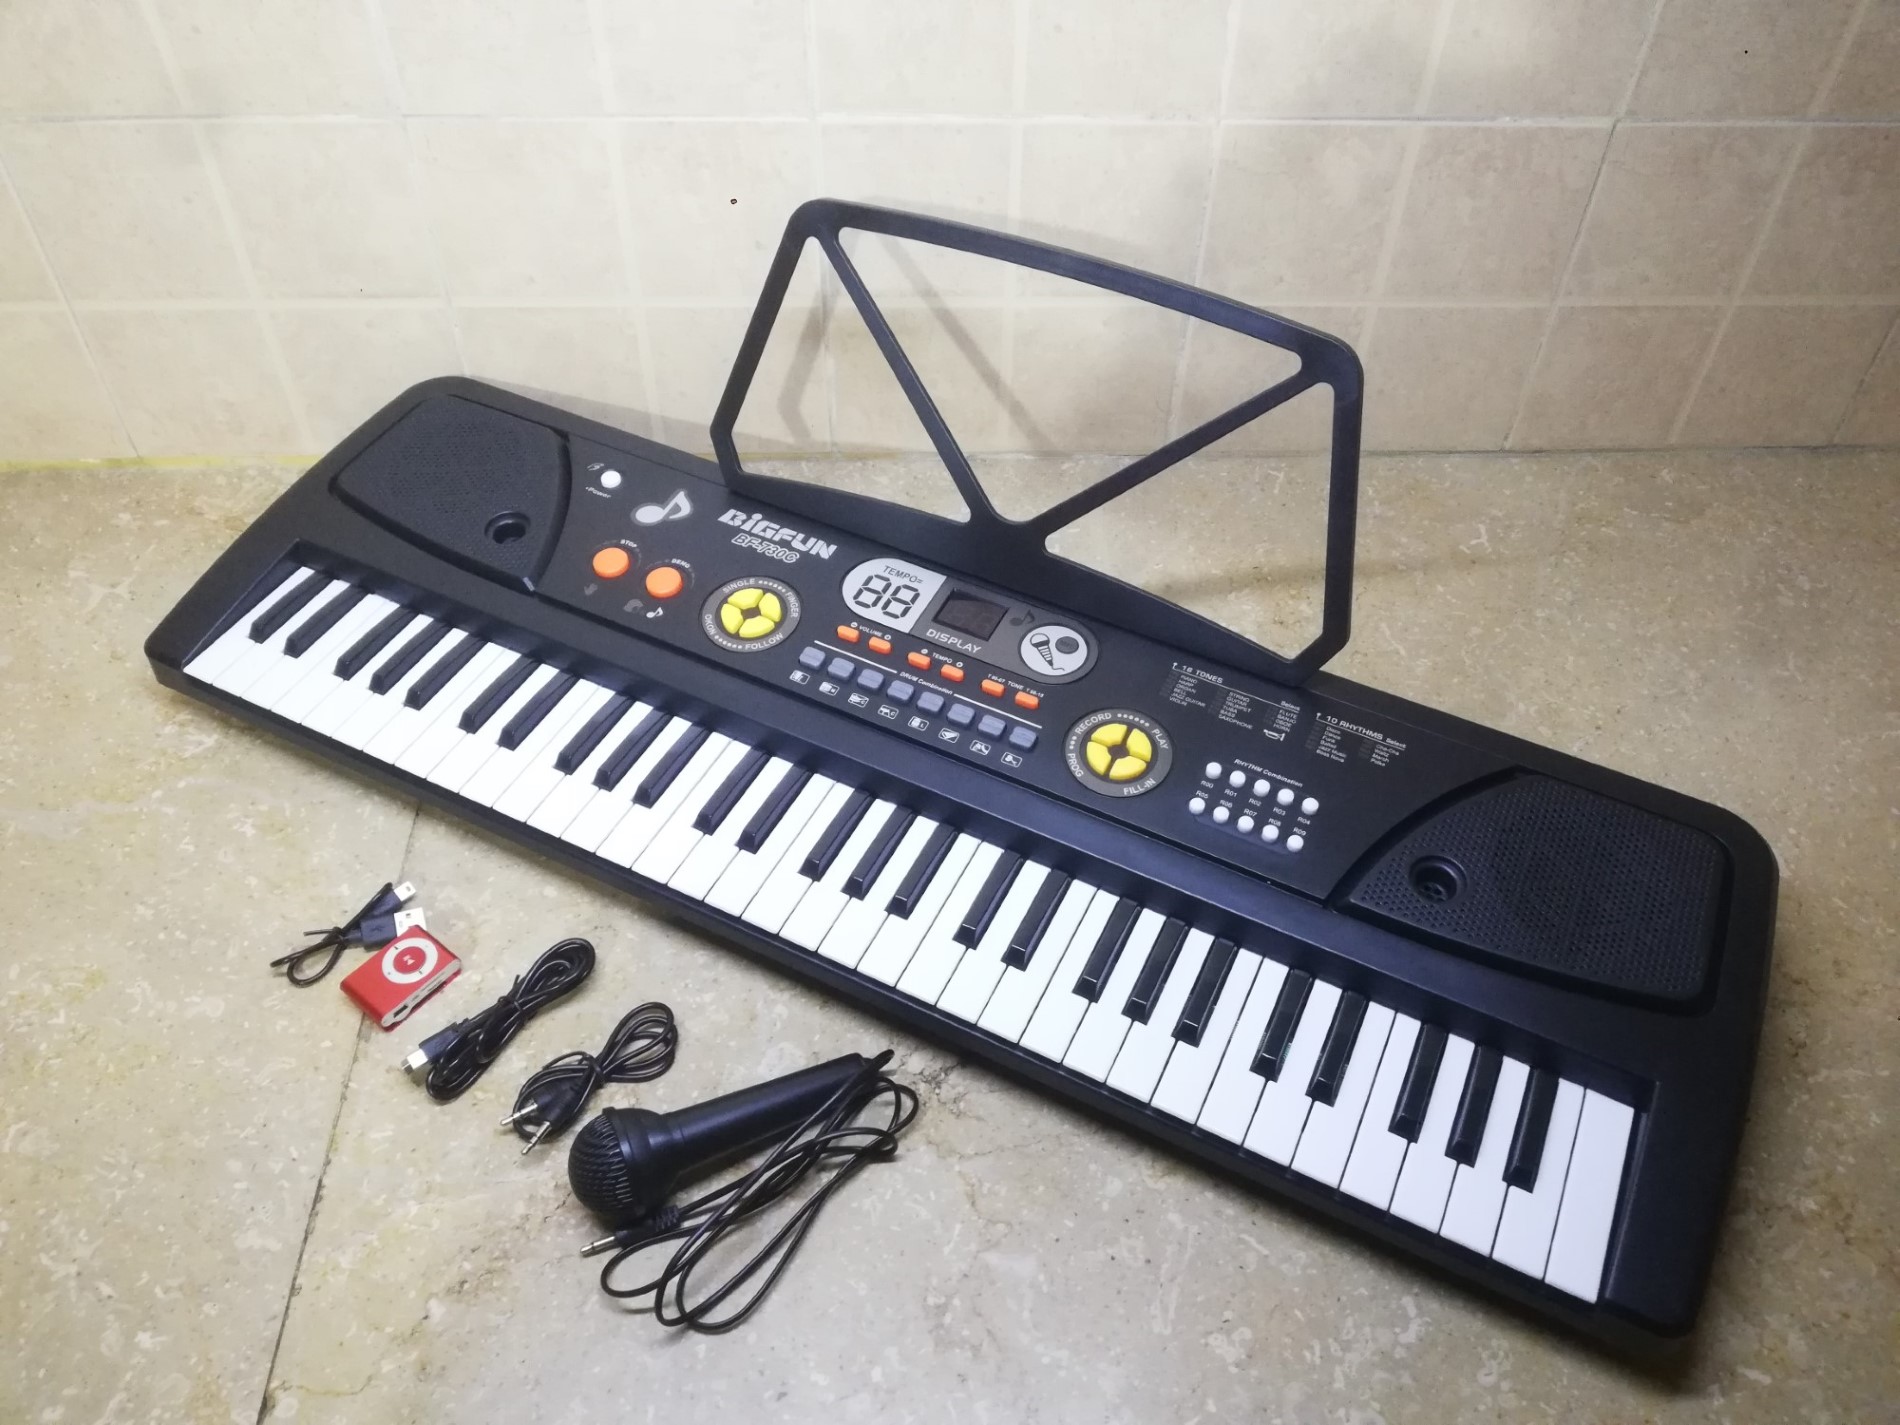 Bigfun 61 Key Piano Keyboard - Unboxing & Testing